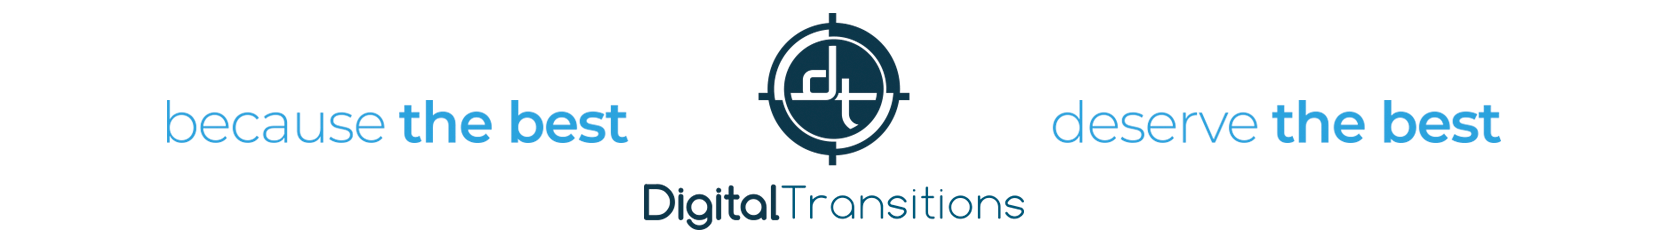 Homepage - Digital Transitions